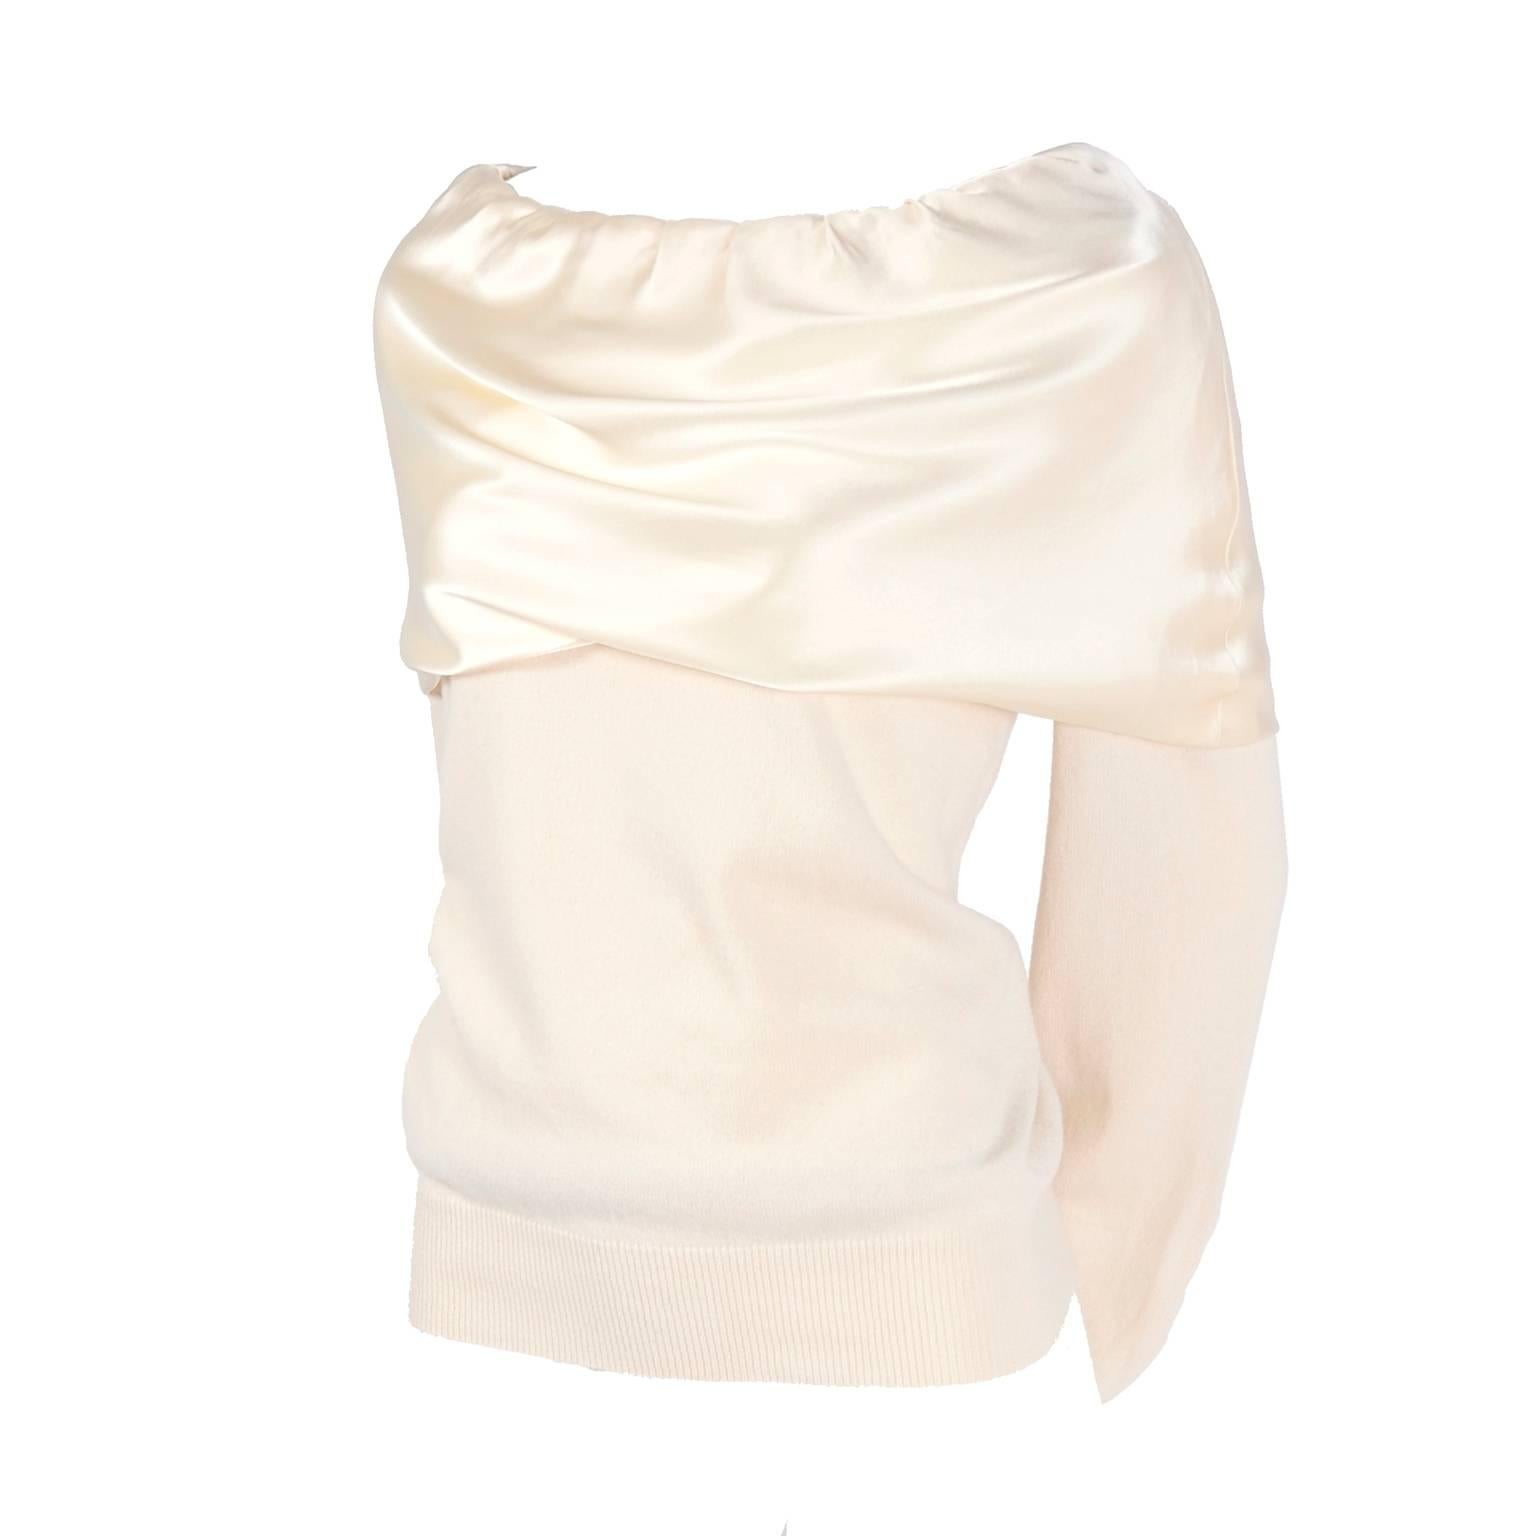 Dolce & Gabbana Cream Cashmere & Silk Off Shoulder Sweater Top Size 44 